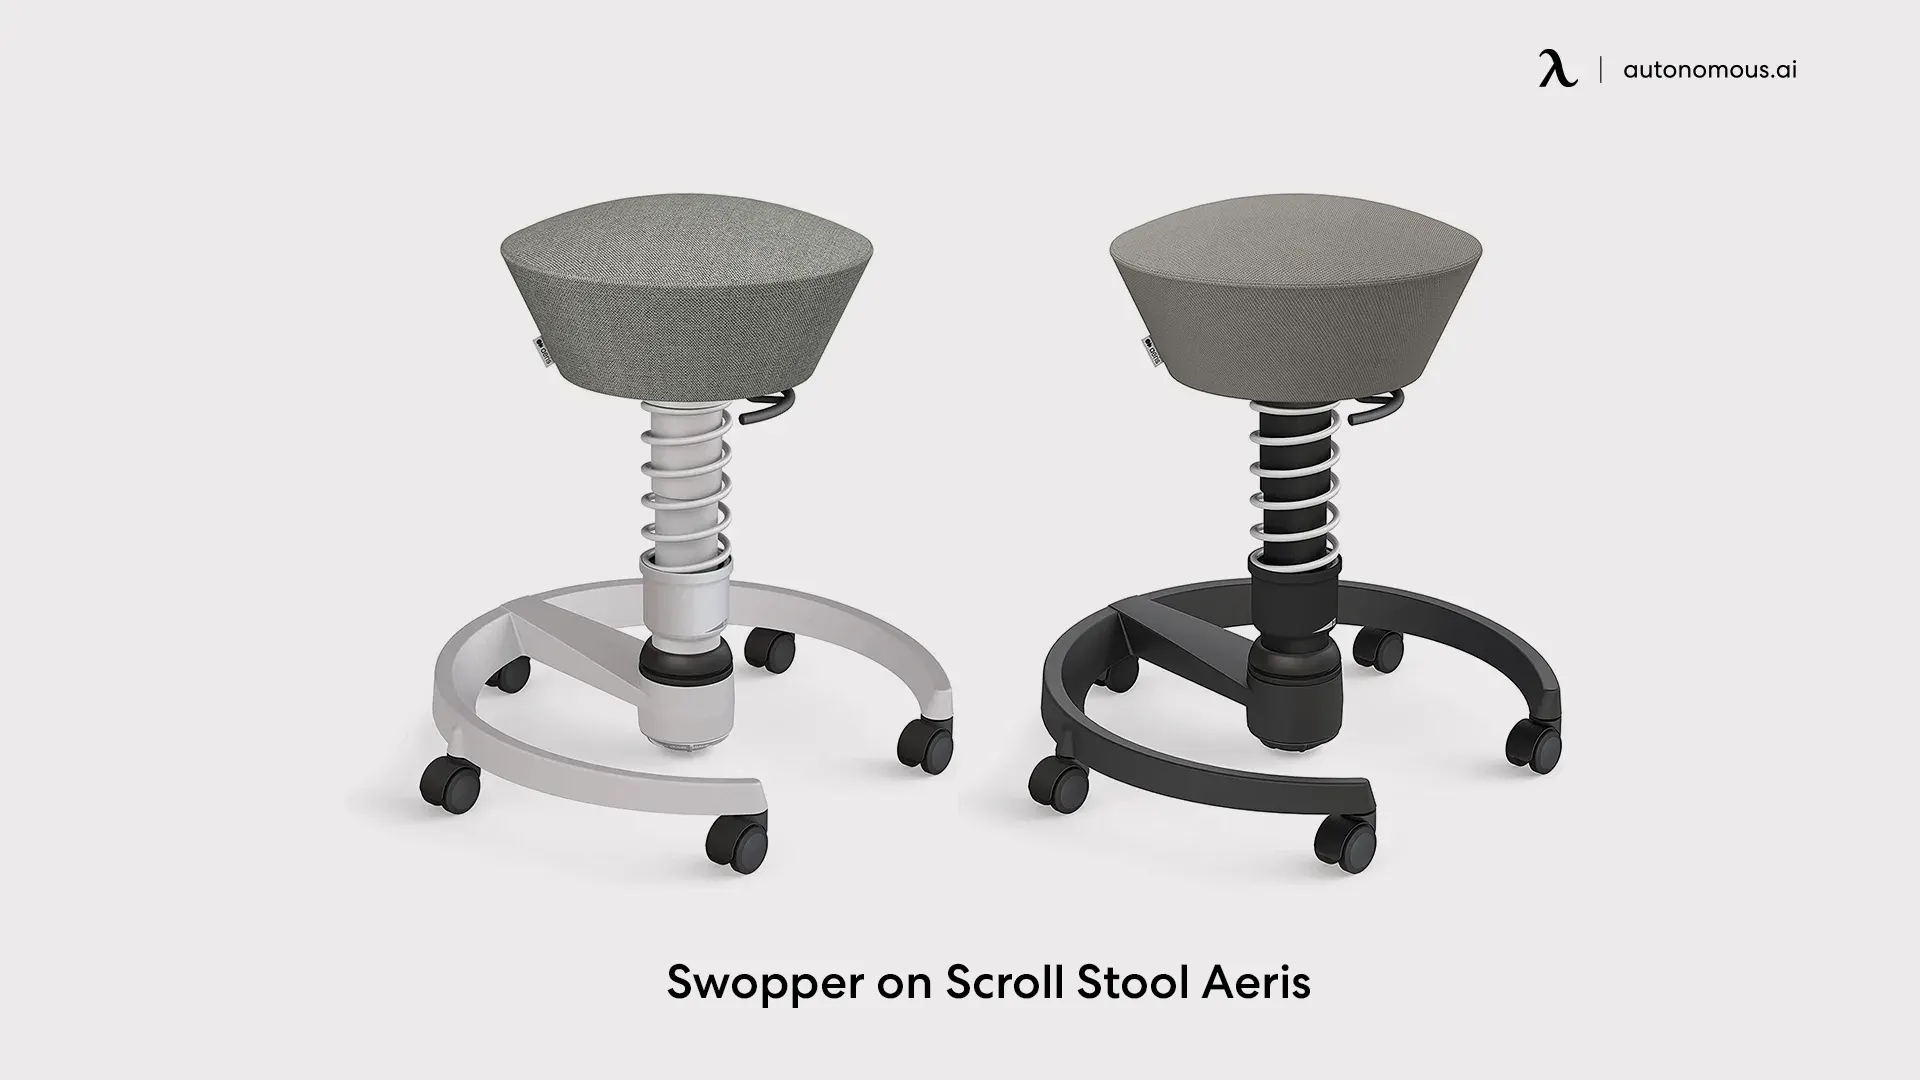 Swopper Stool - alternative office chairs